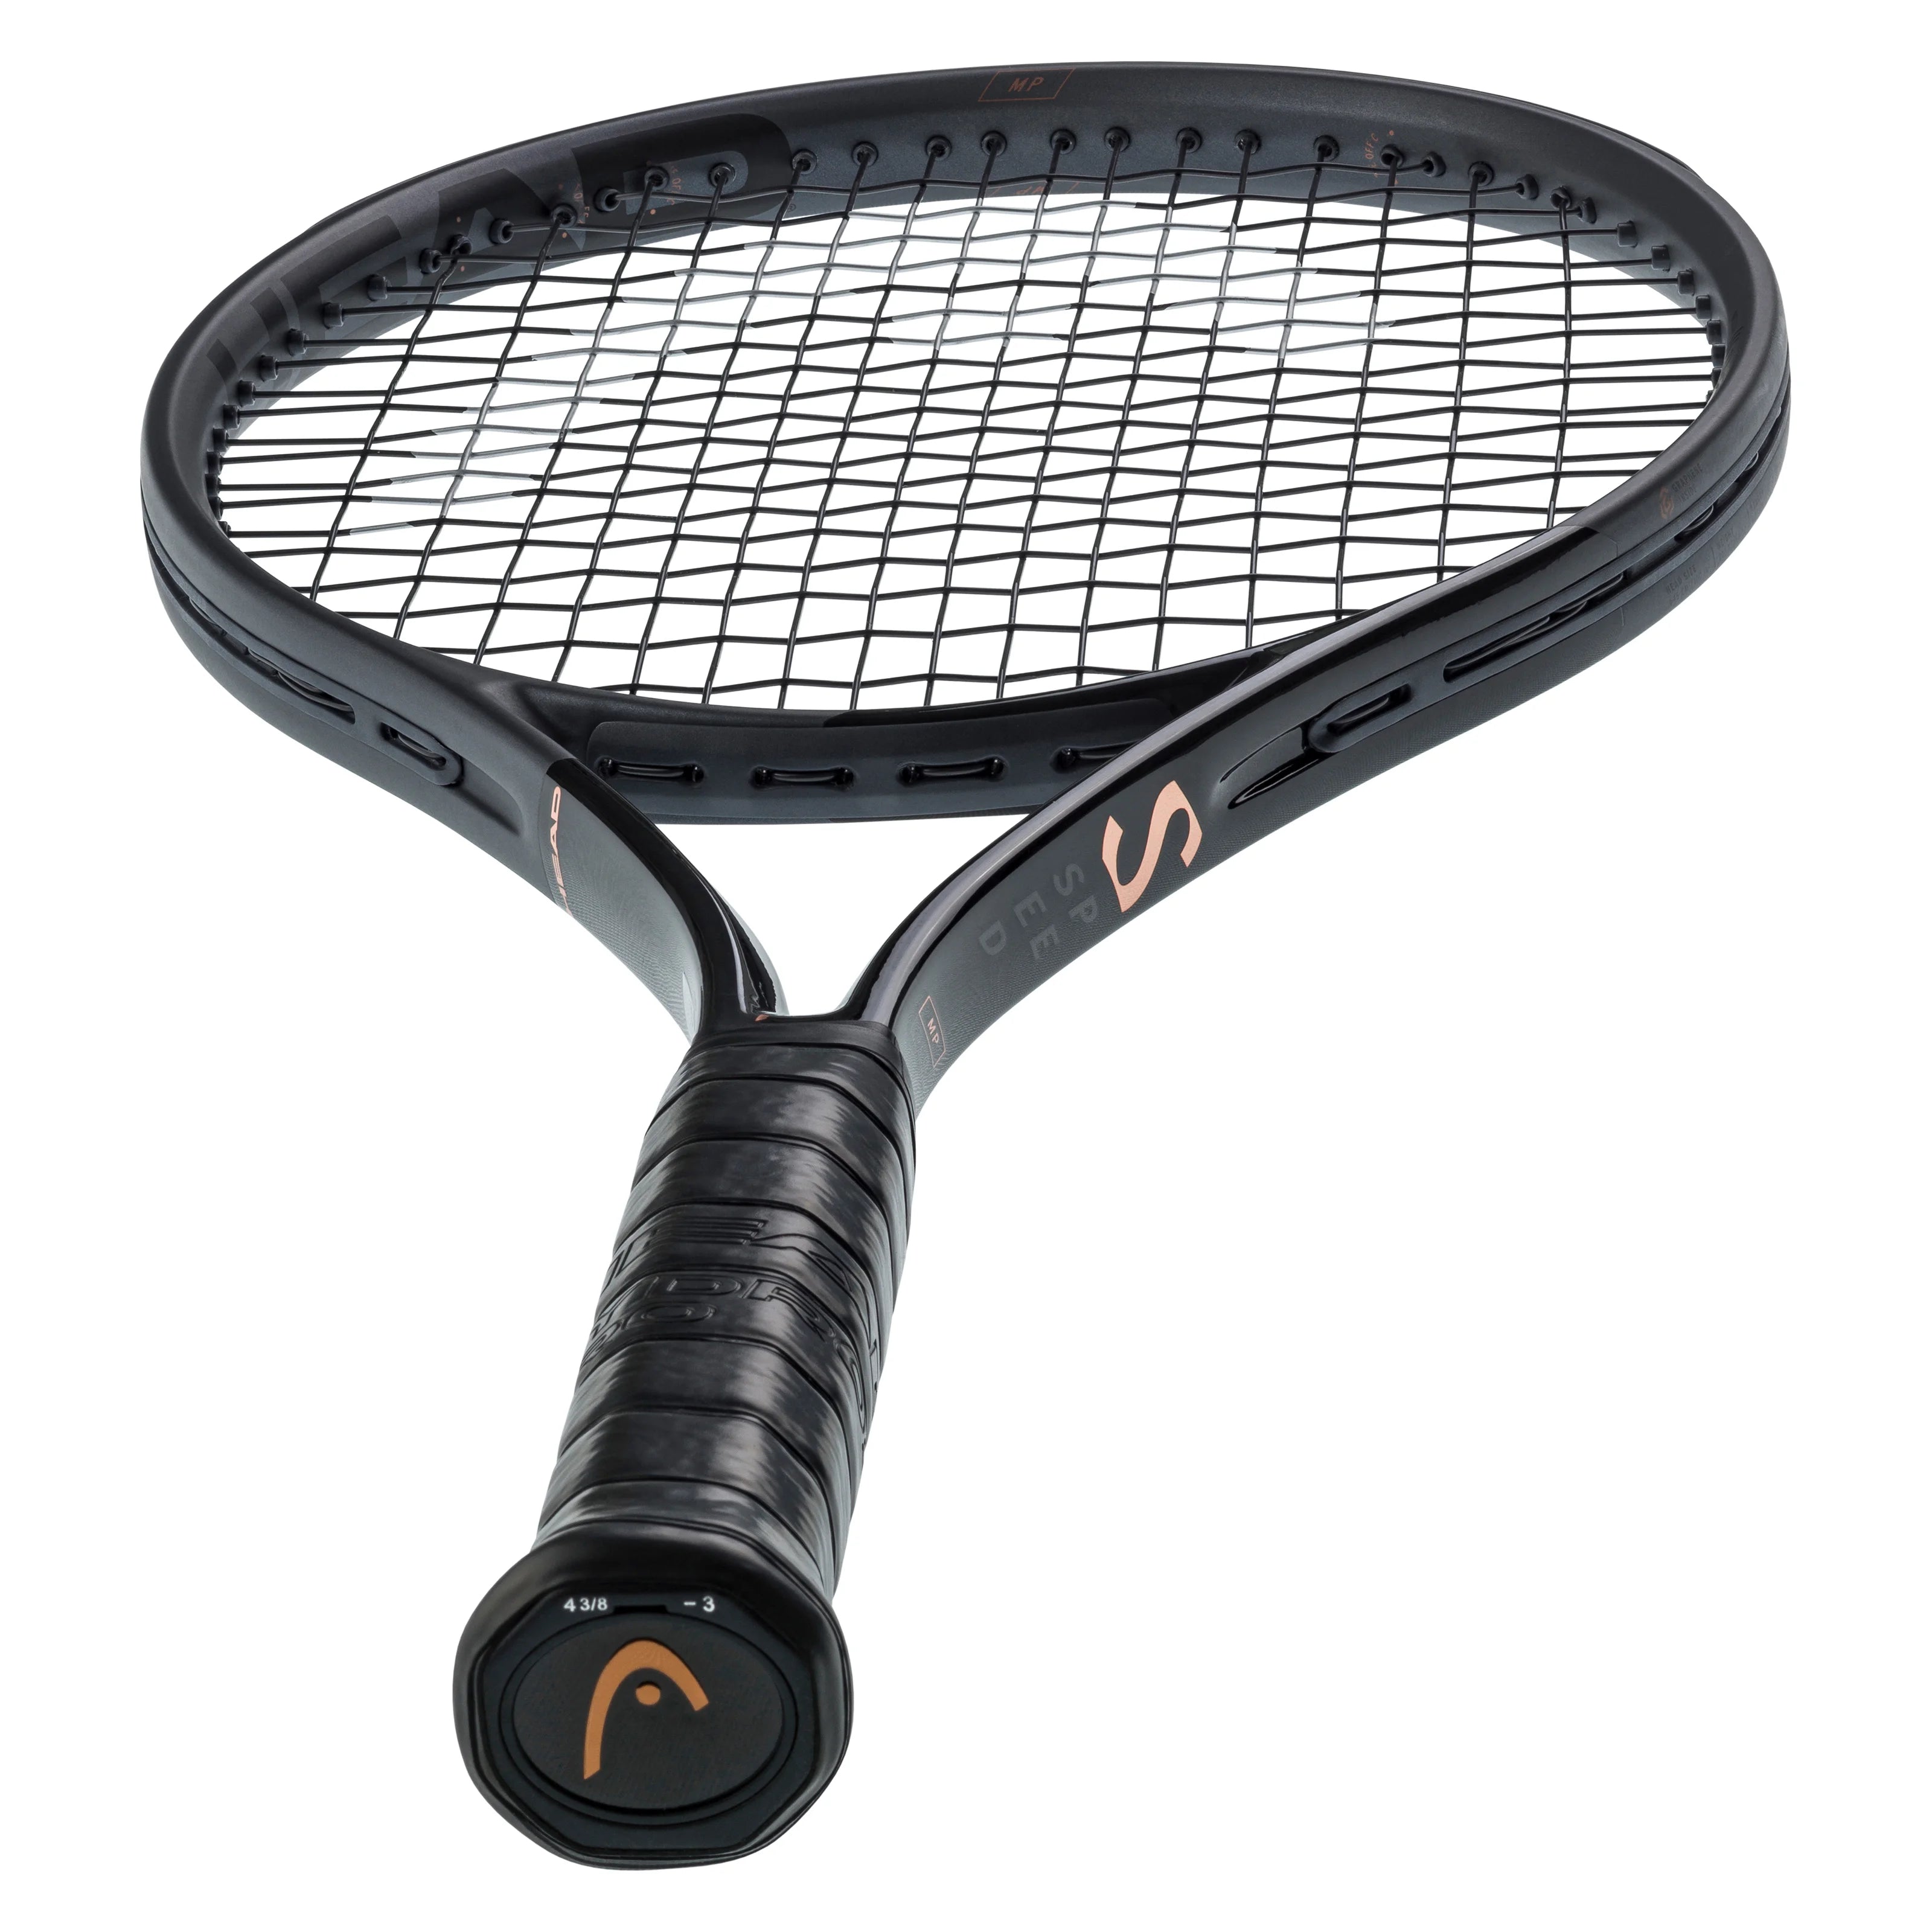 Head Speed MP Black 2023 Tennis Racquet (Limited Edition)